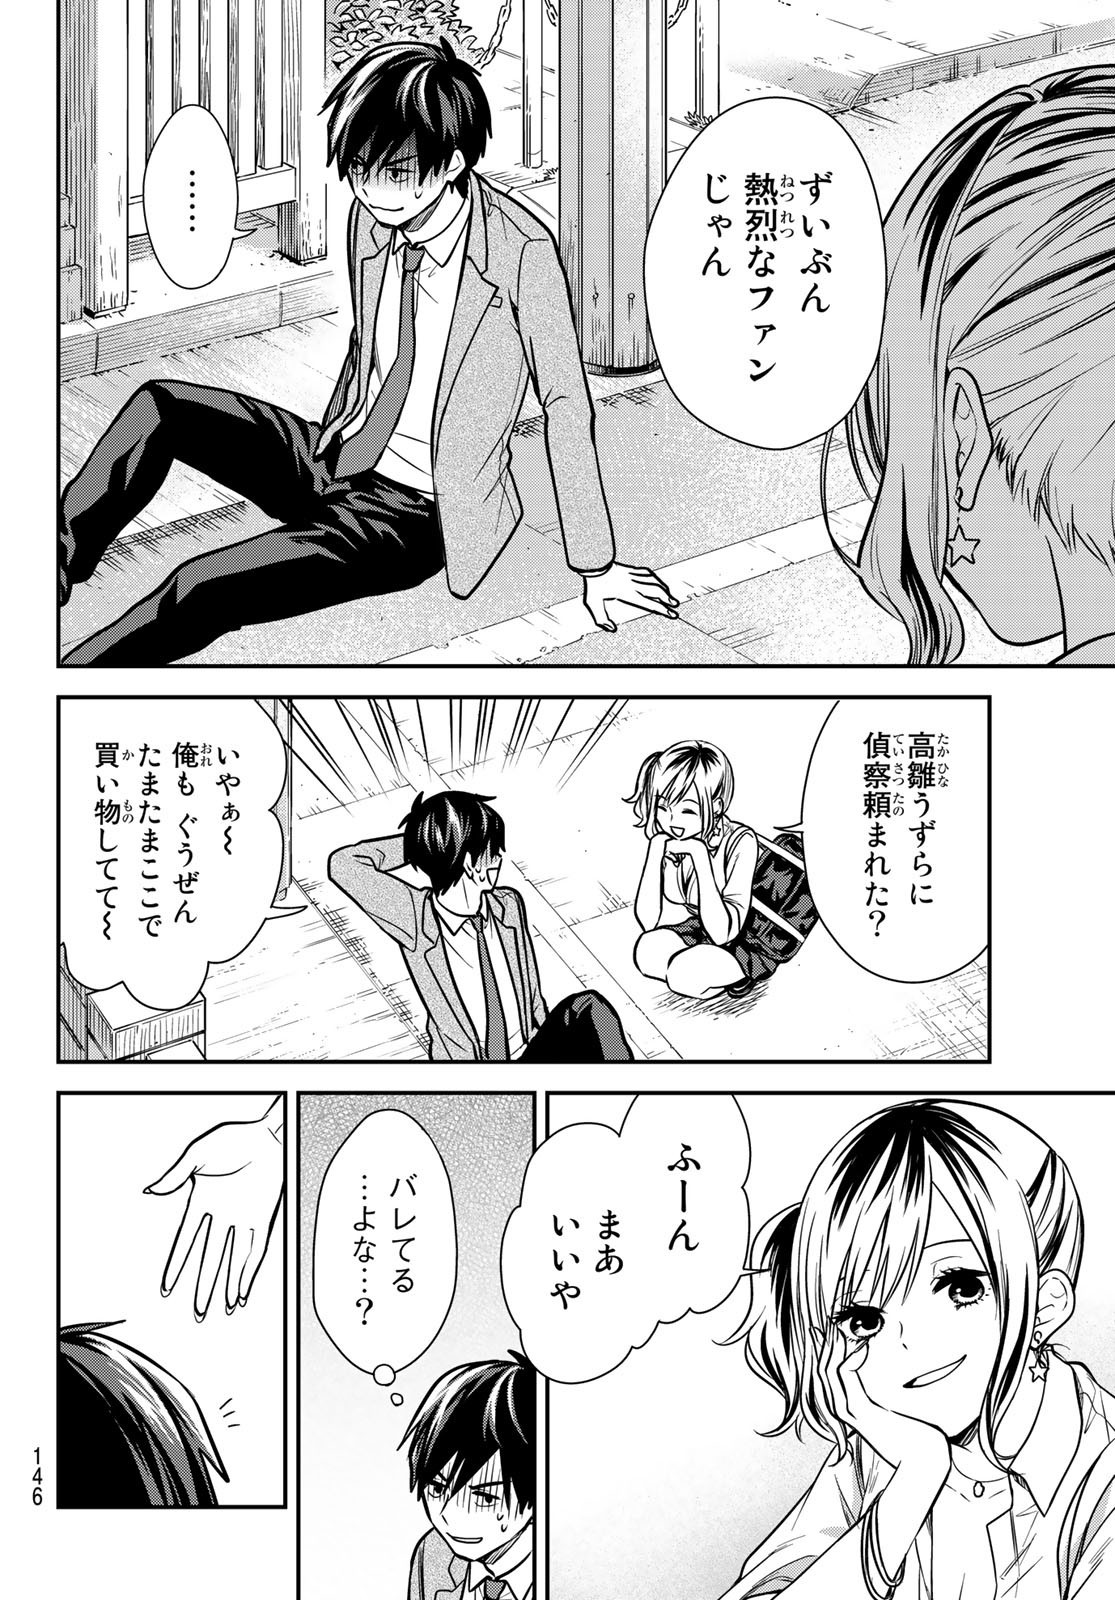 Kimi ga Megami Nara Ii no ni (I Wish You Were My Muse) - Chapter 006 - Page 16